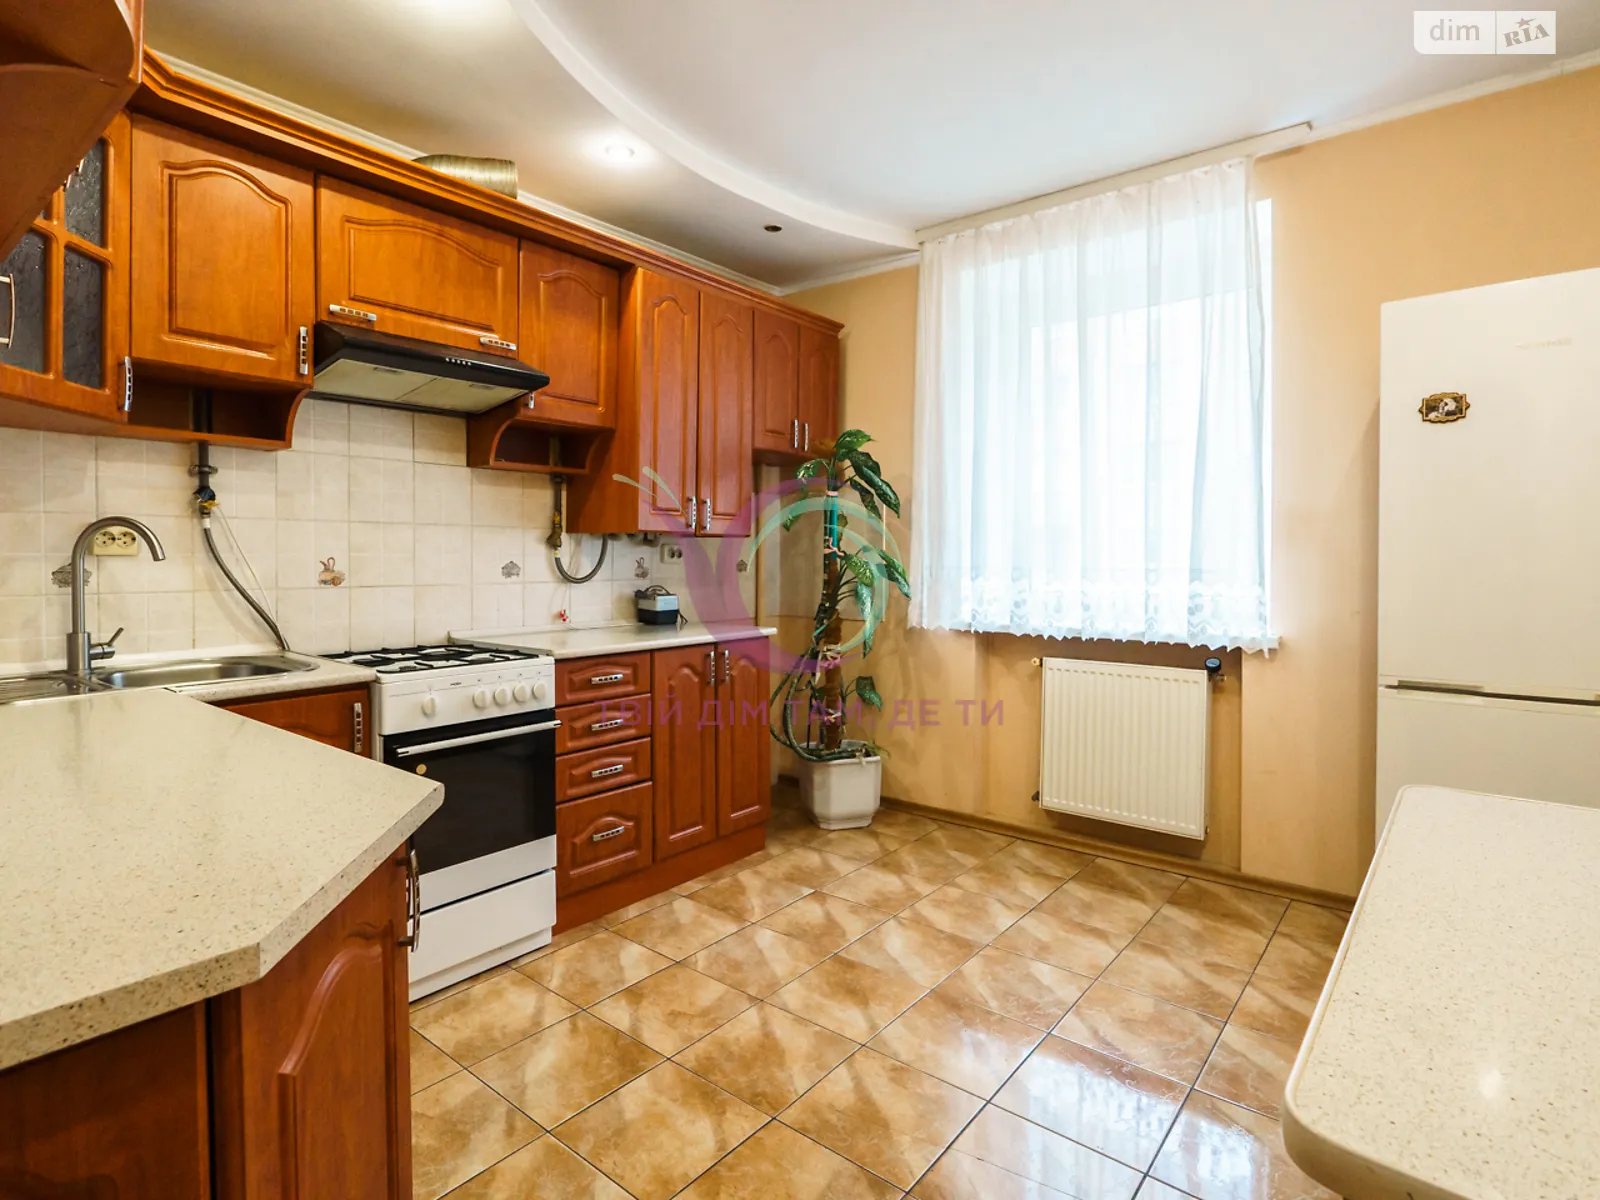 Сдается в аренду 1-комнатная квартира 46 кв. м в Ивано-Франковске, цена: 7000 грн